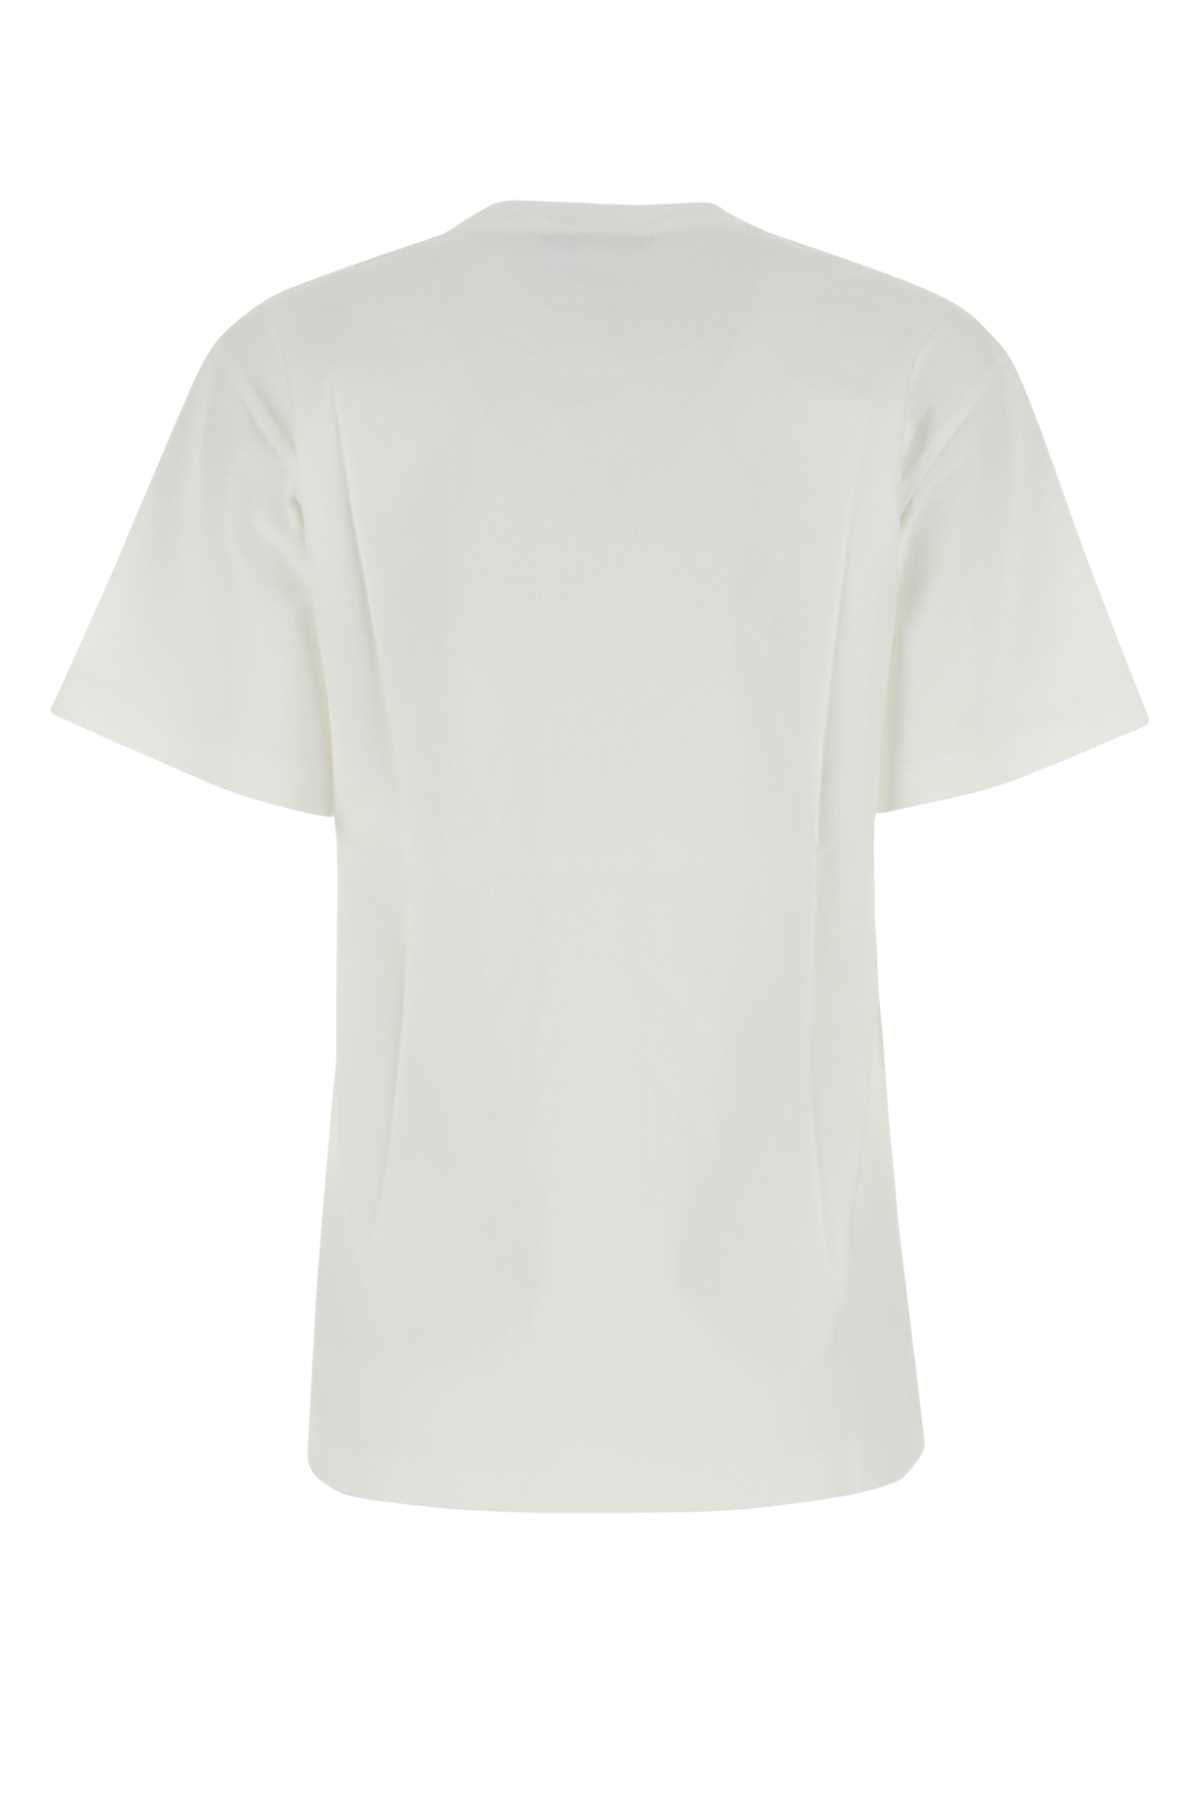 Ambush White Cotton T-shirt In Clouddanc